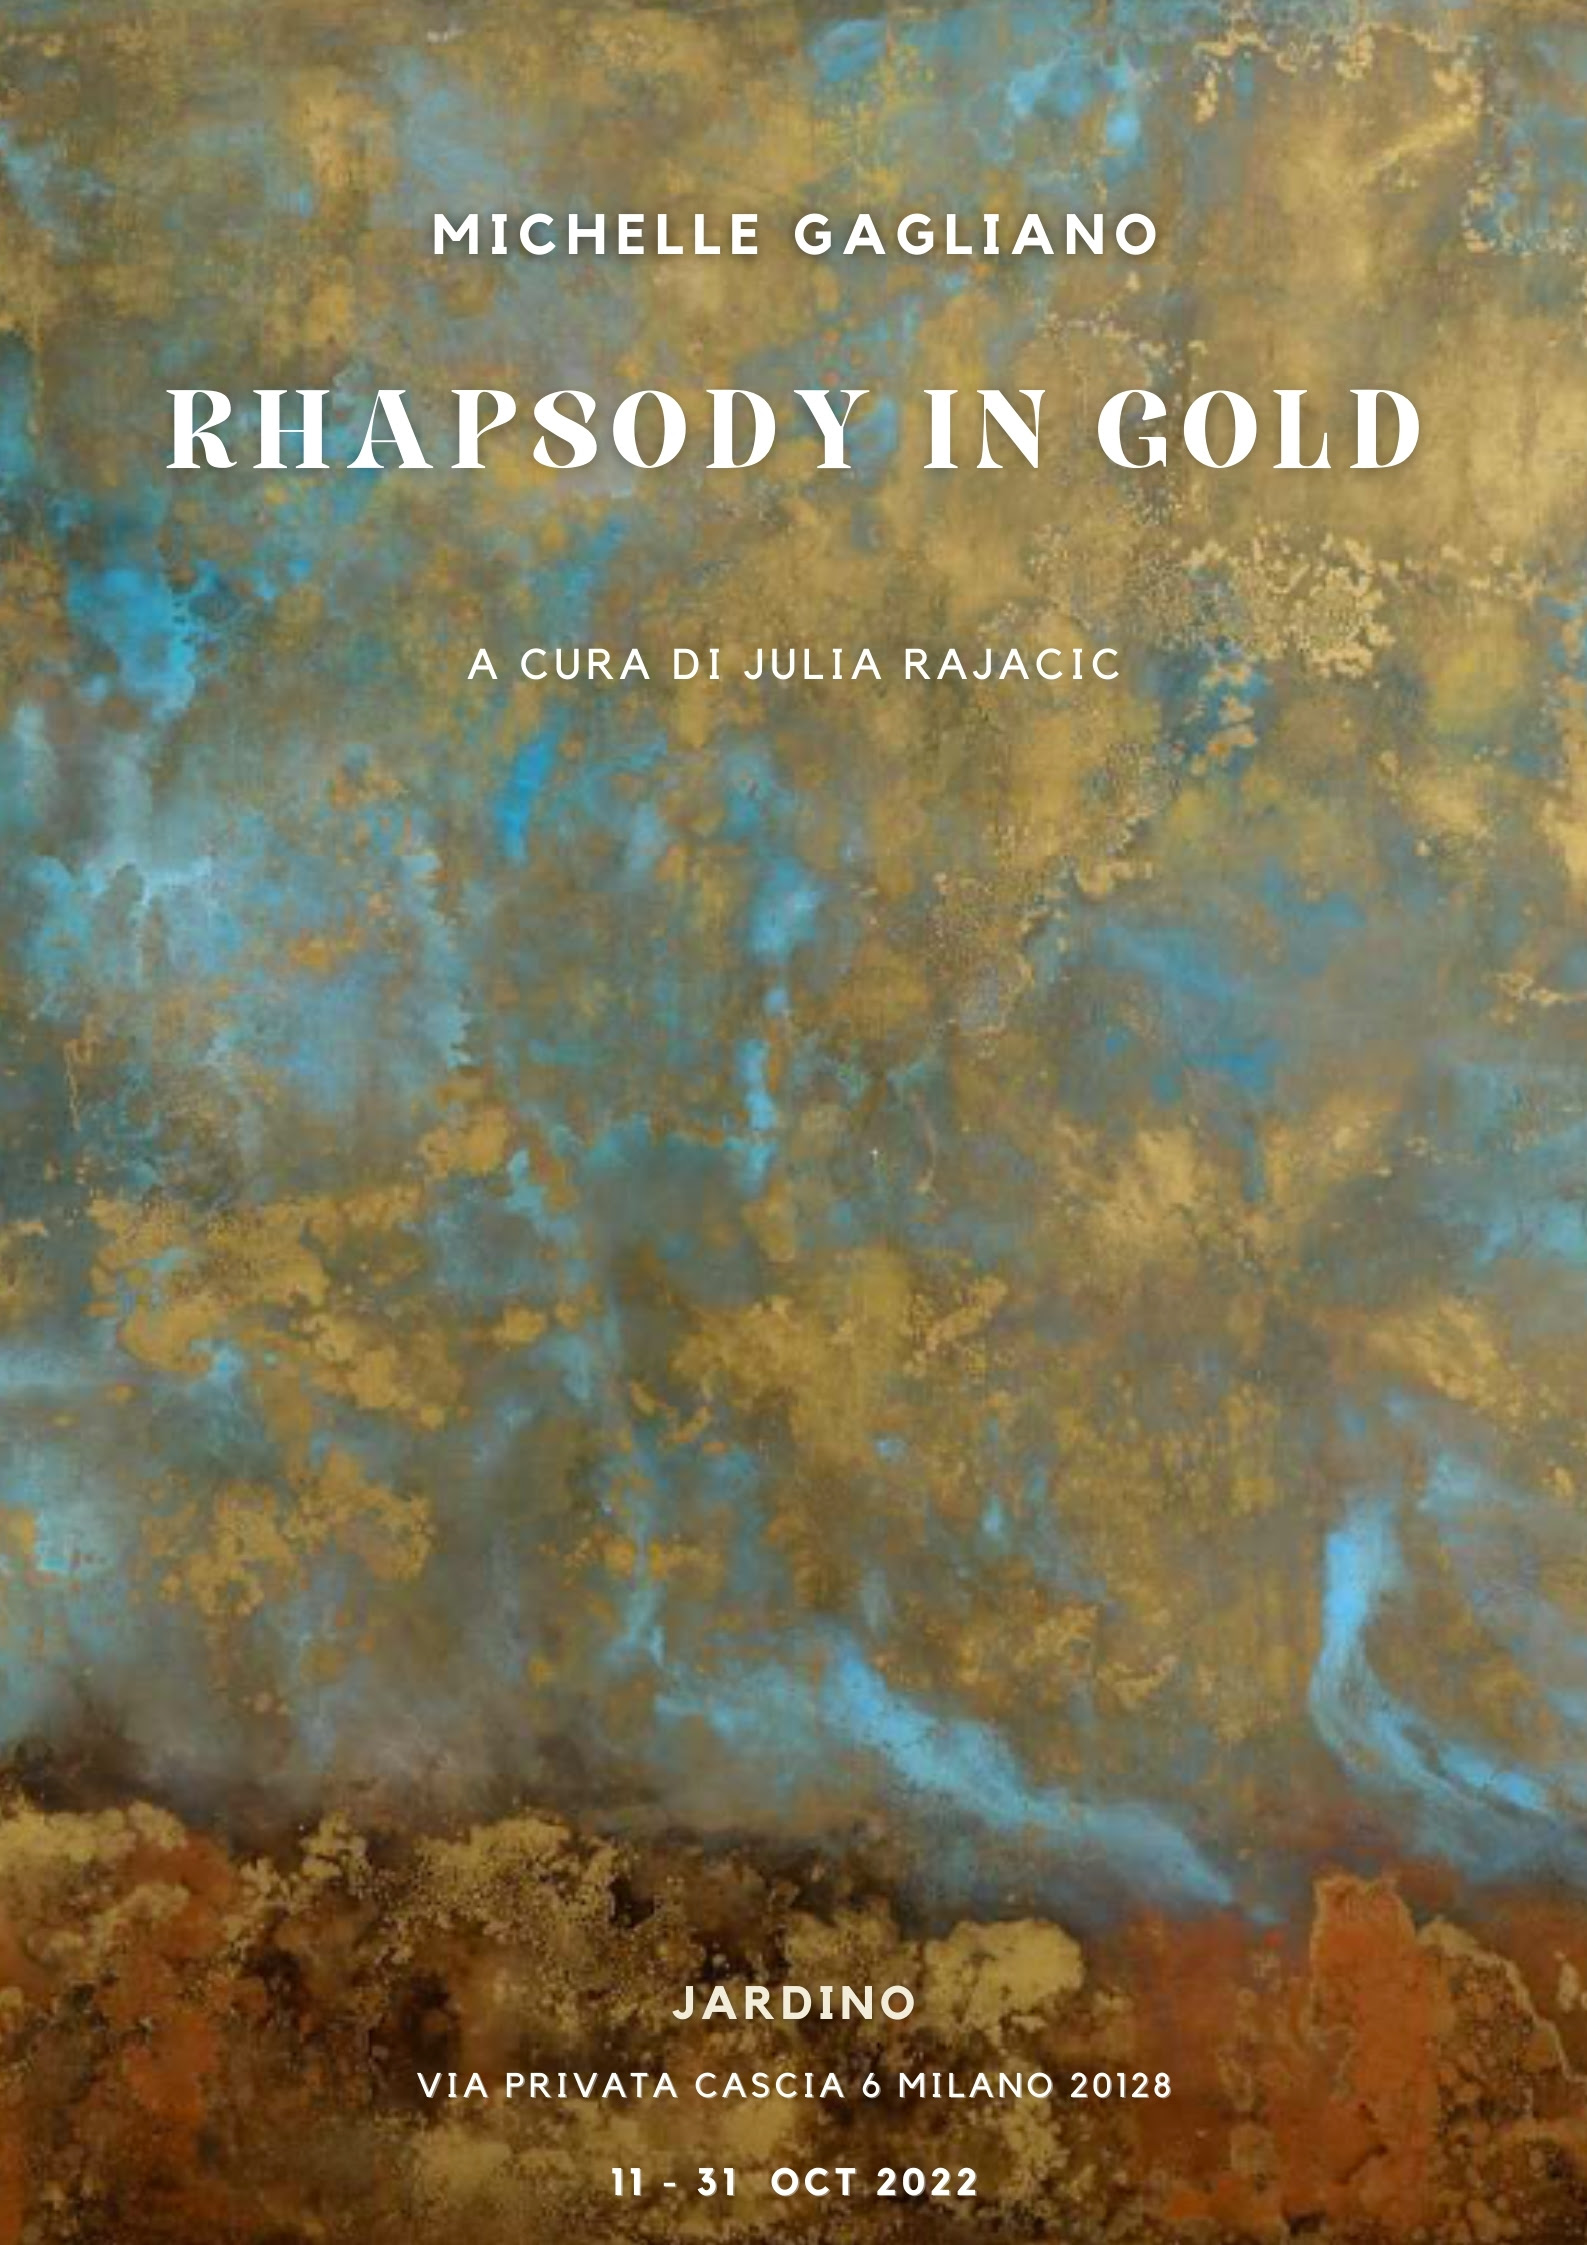 Michelle Gagliano - Rhapsody in Gold